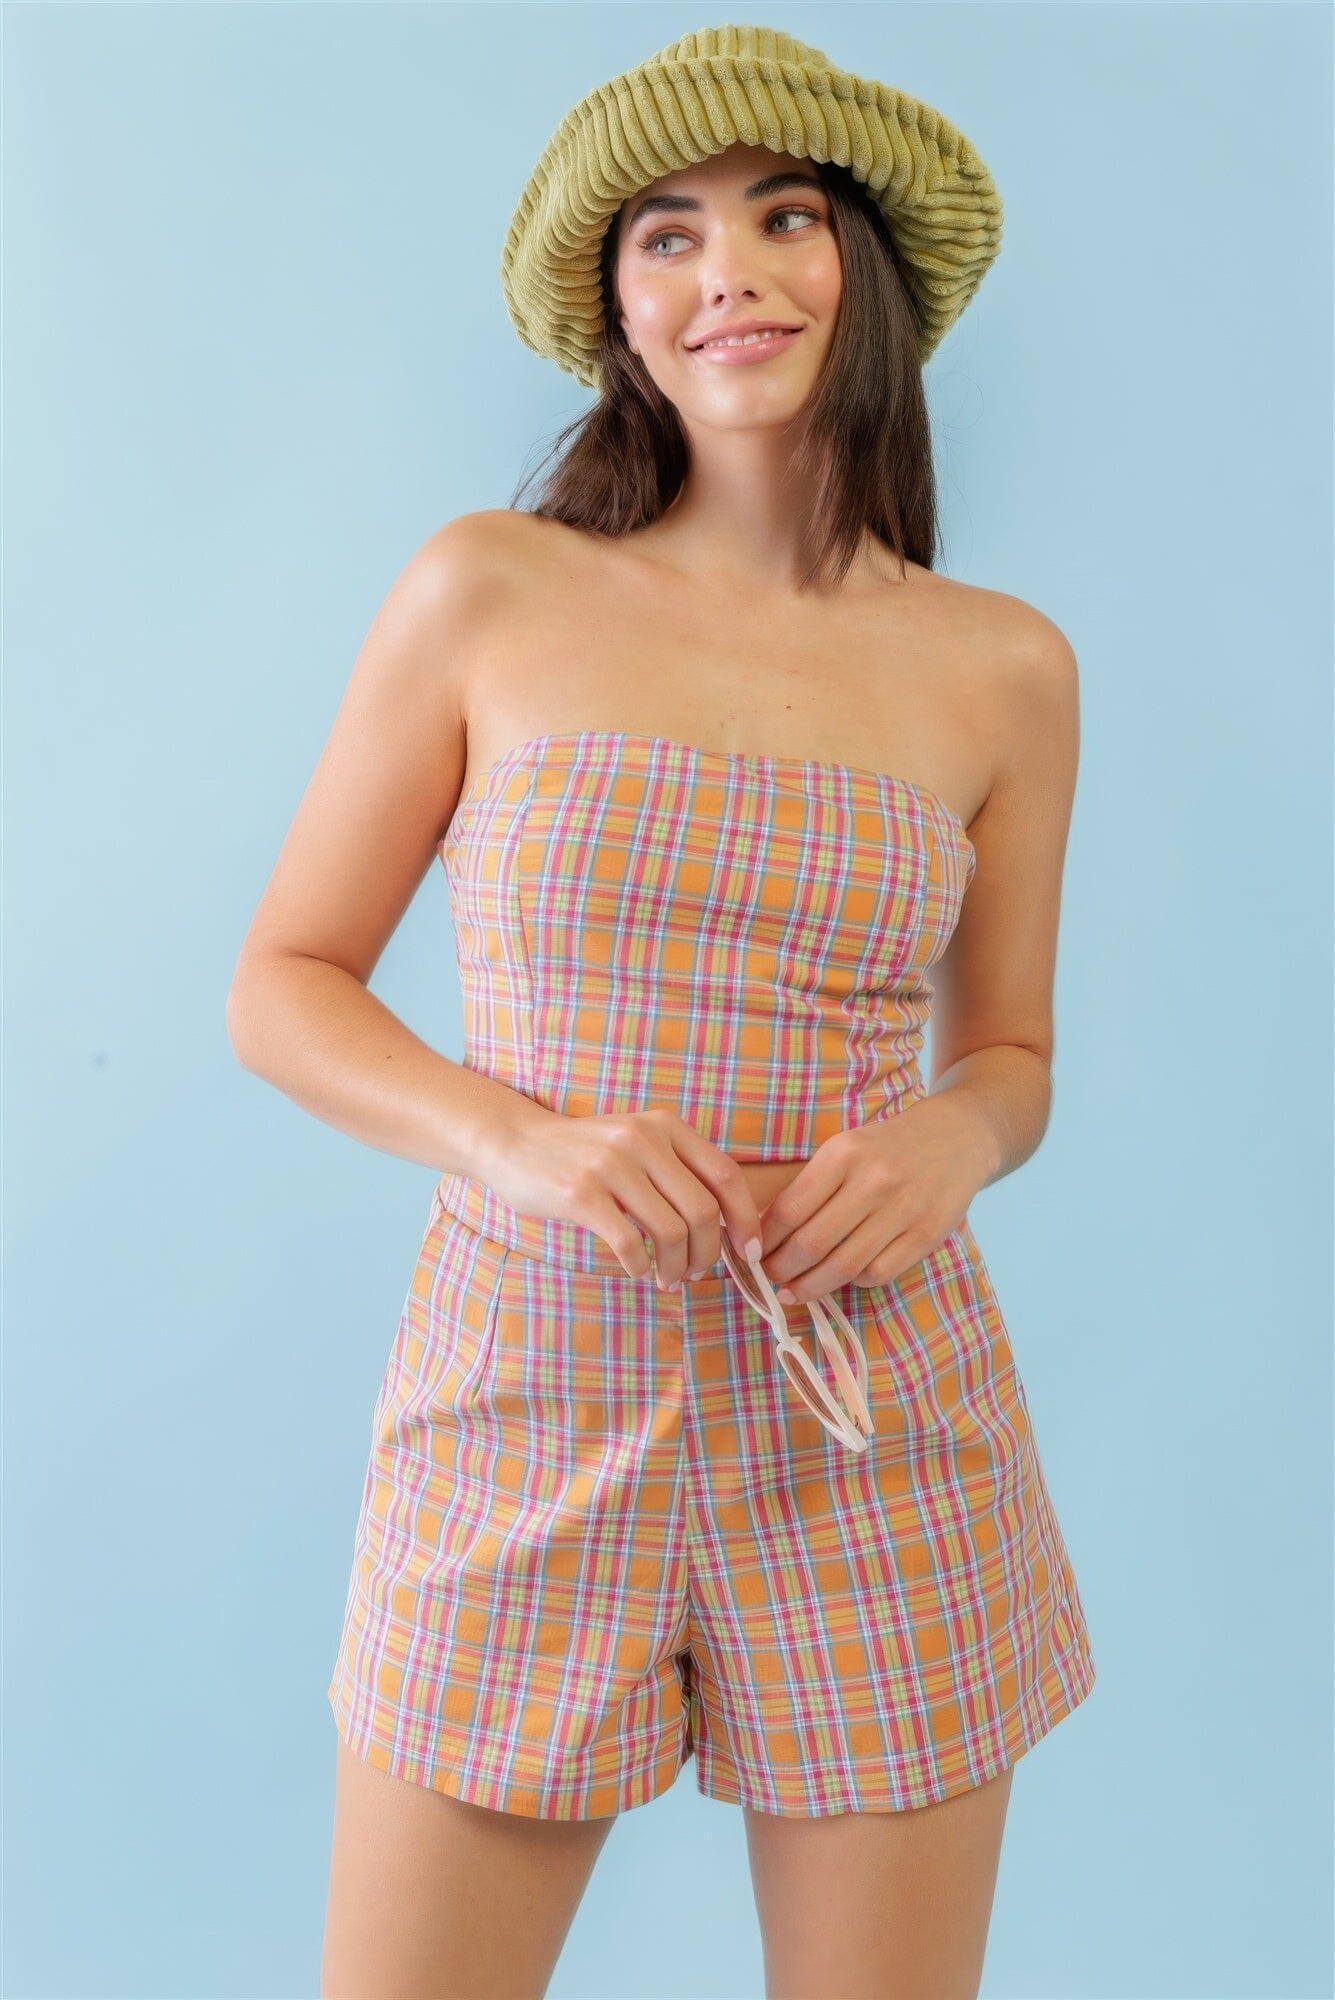 Orange & Aqua Plaid Print Cotton Strapless Crop Top & High Waist Two Pocket Shorts Outfit Set Outfit Sets jehouze 